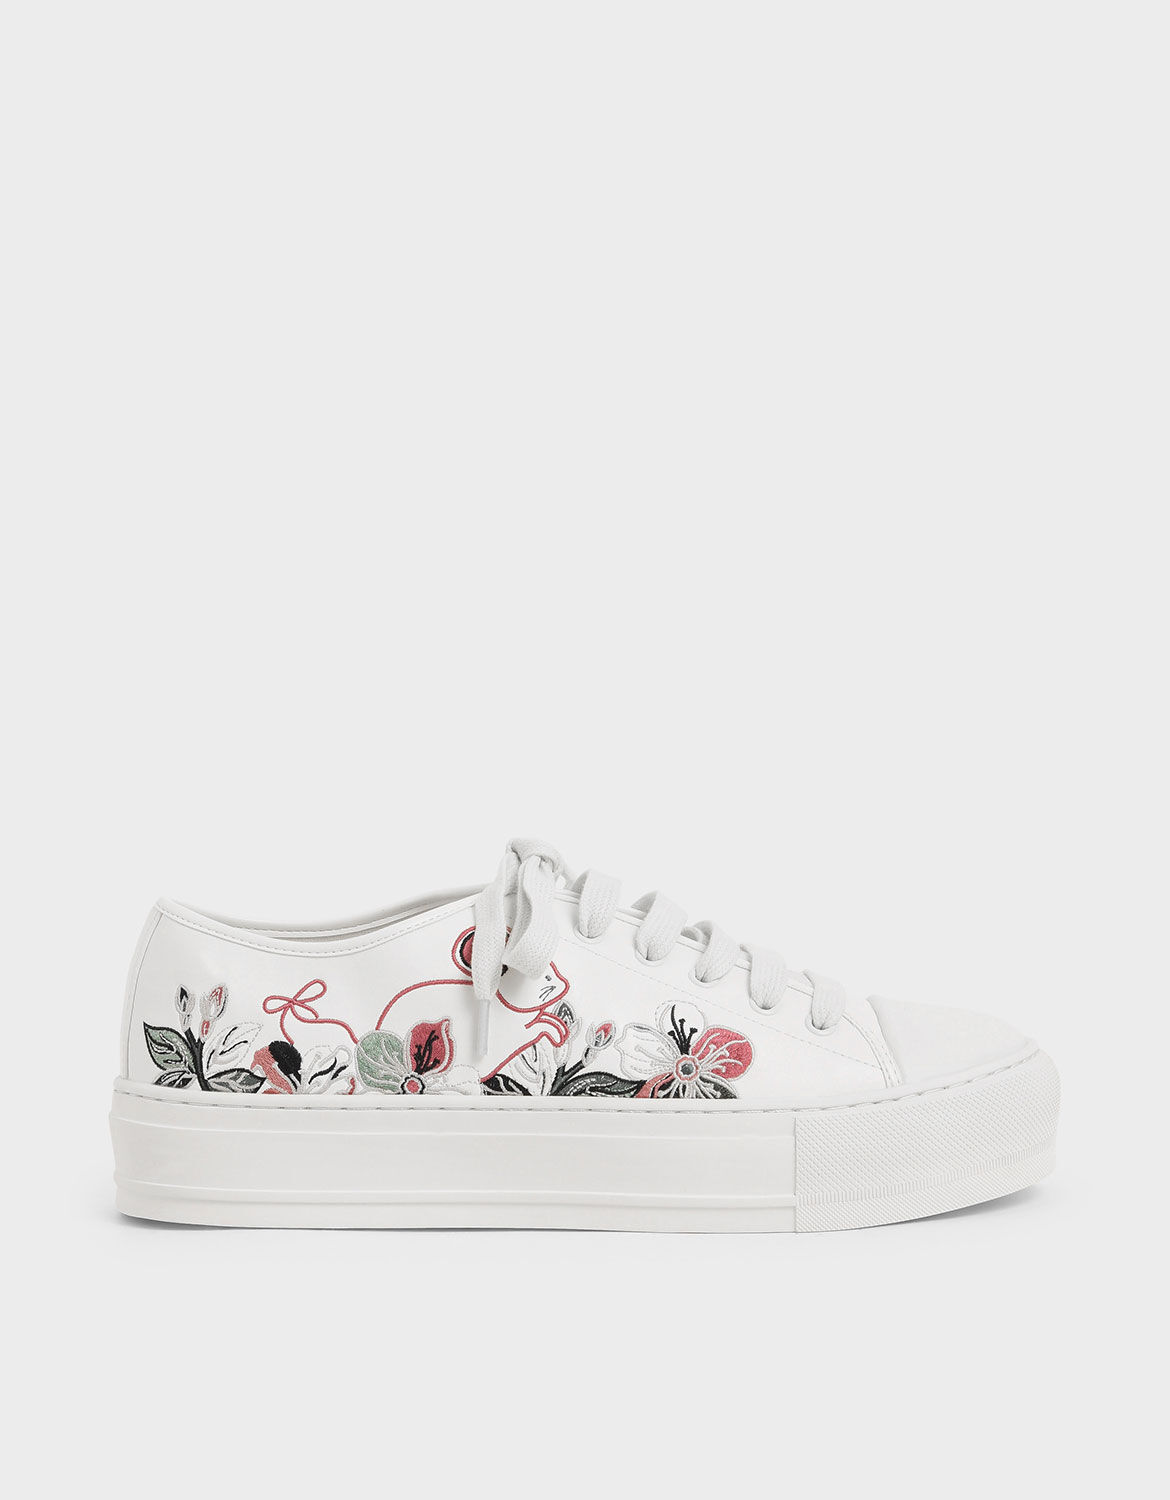 floral sneakers